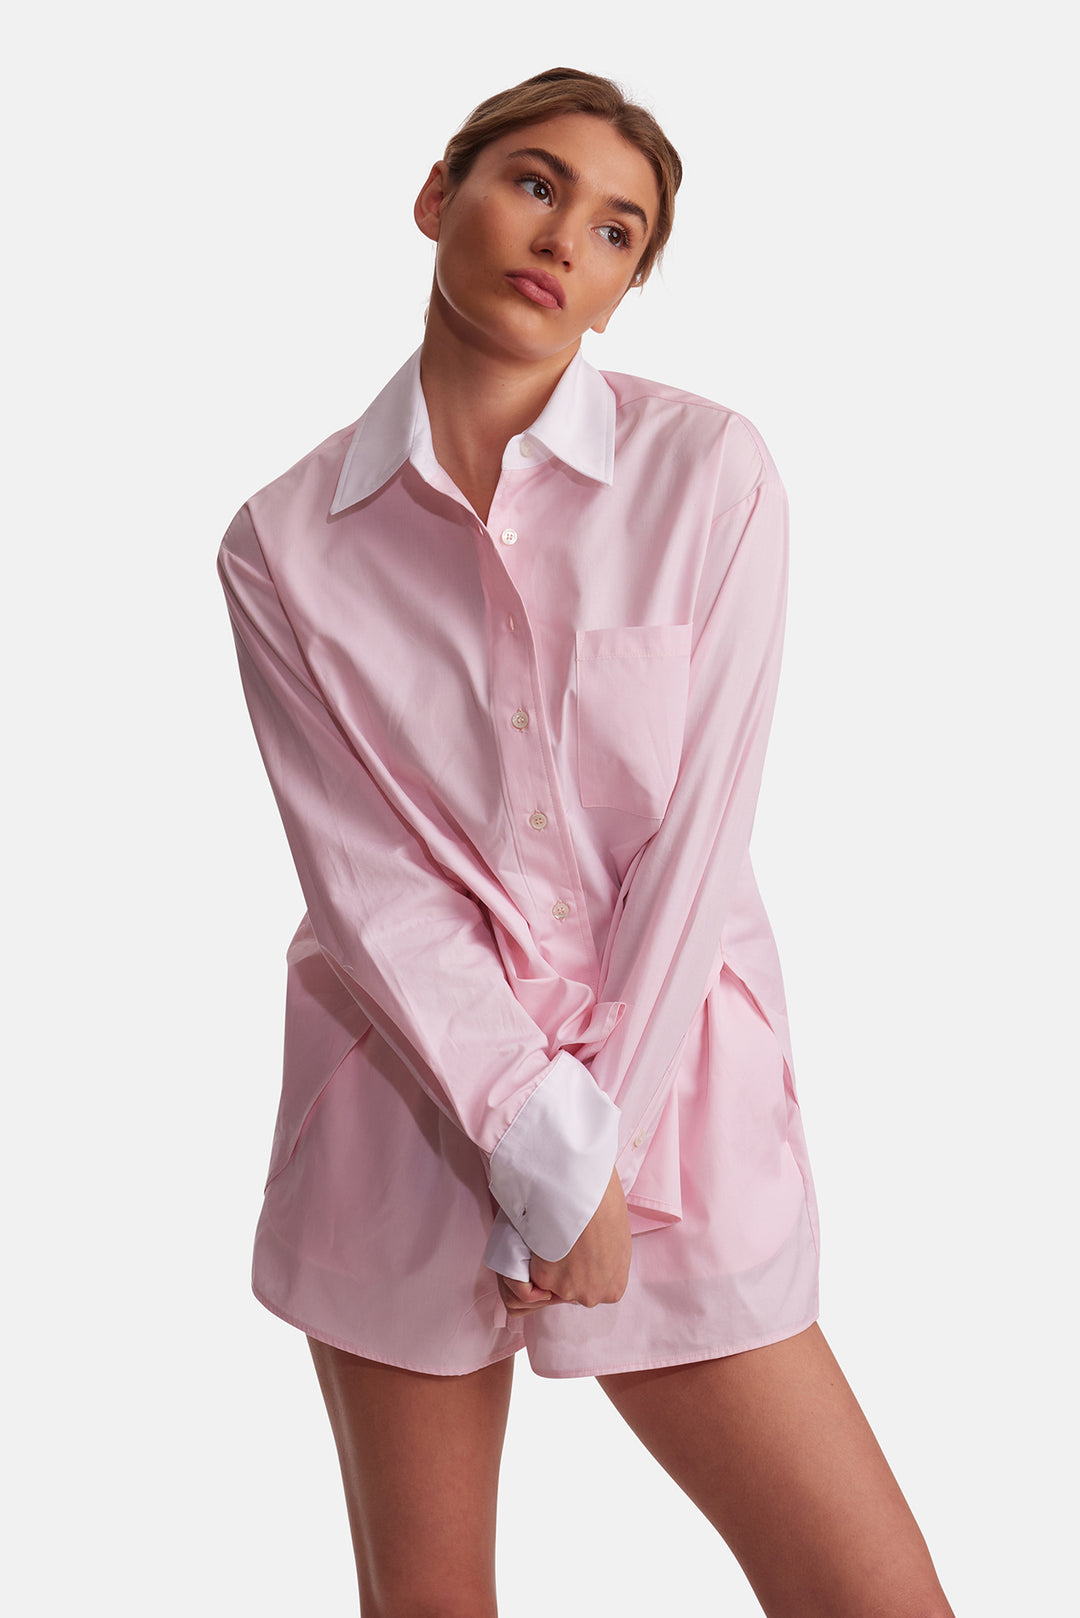 Lily Poplin Boyfriend Shirt Pink W/ White Collar